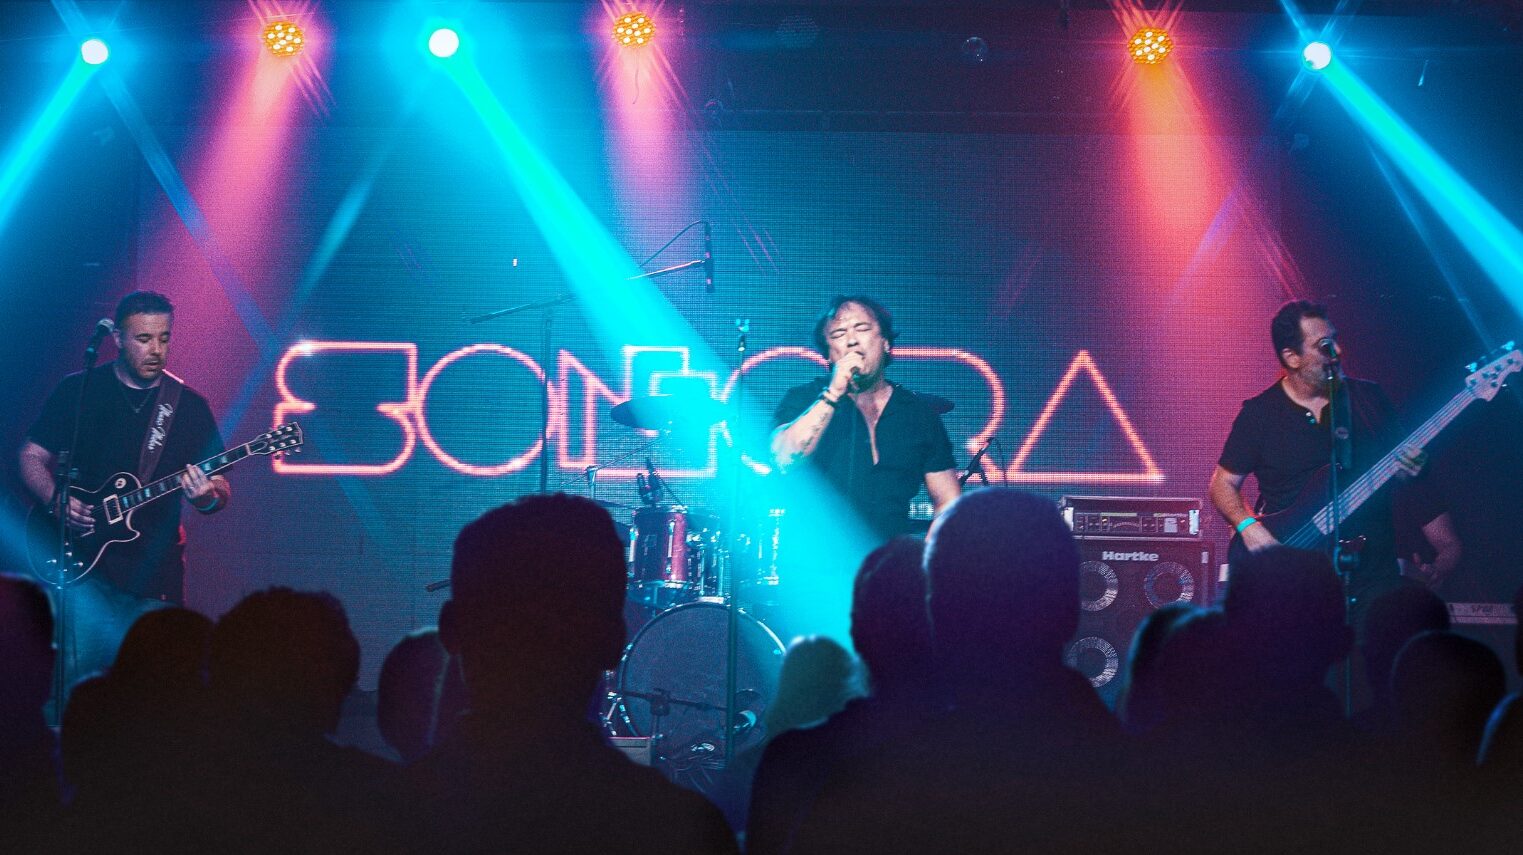 Conheça Sonnora, banda paulista que mistura pop rock e soul